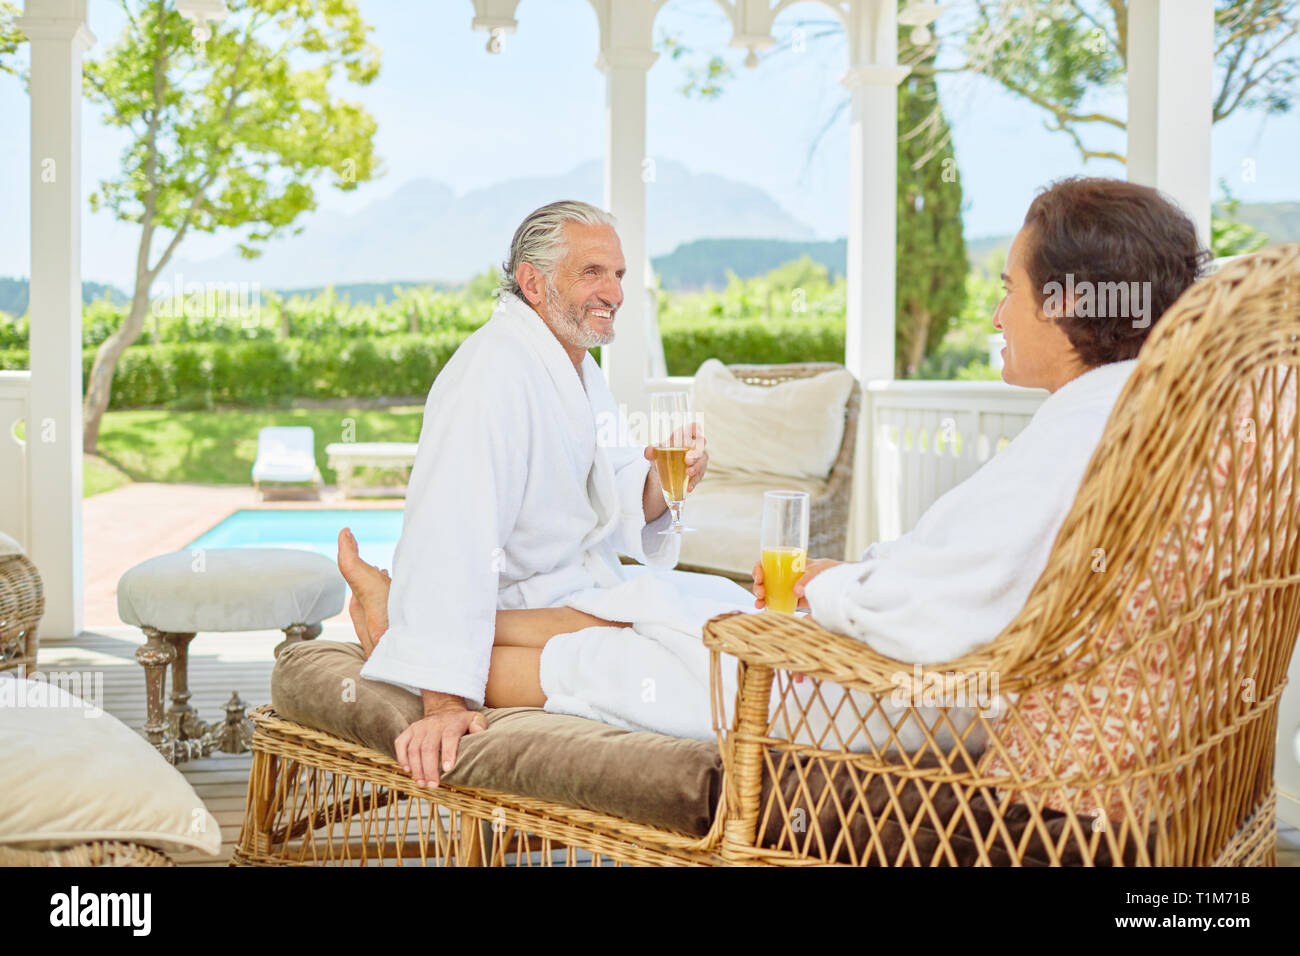 Mature couple in bathrobes relaxing, drinking mimosas in resort gazebo Stock Photo